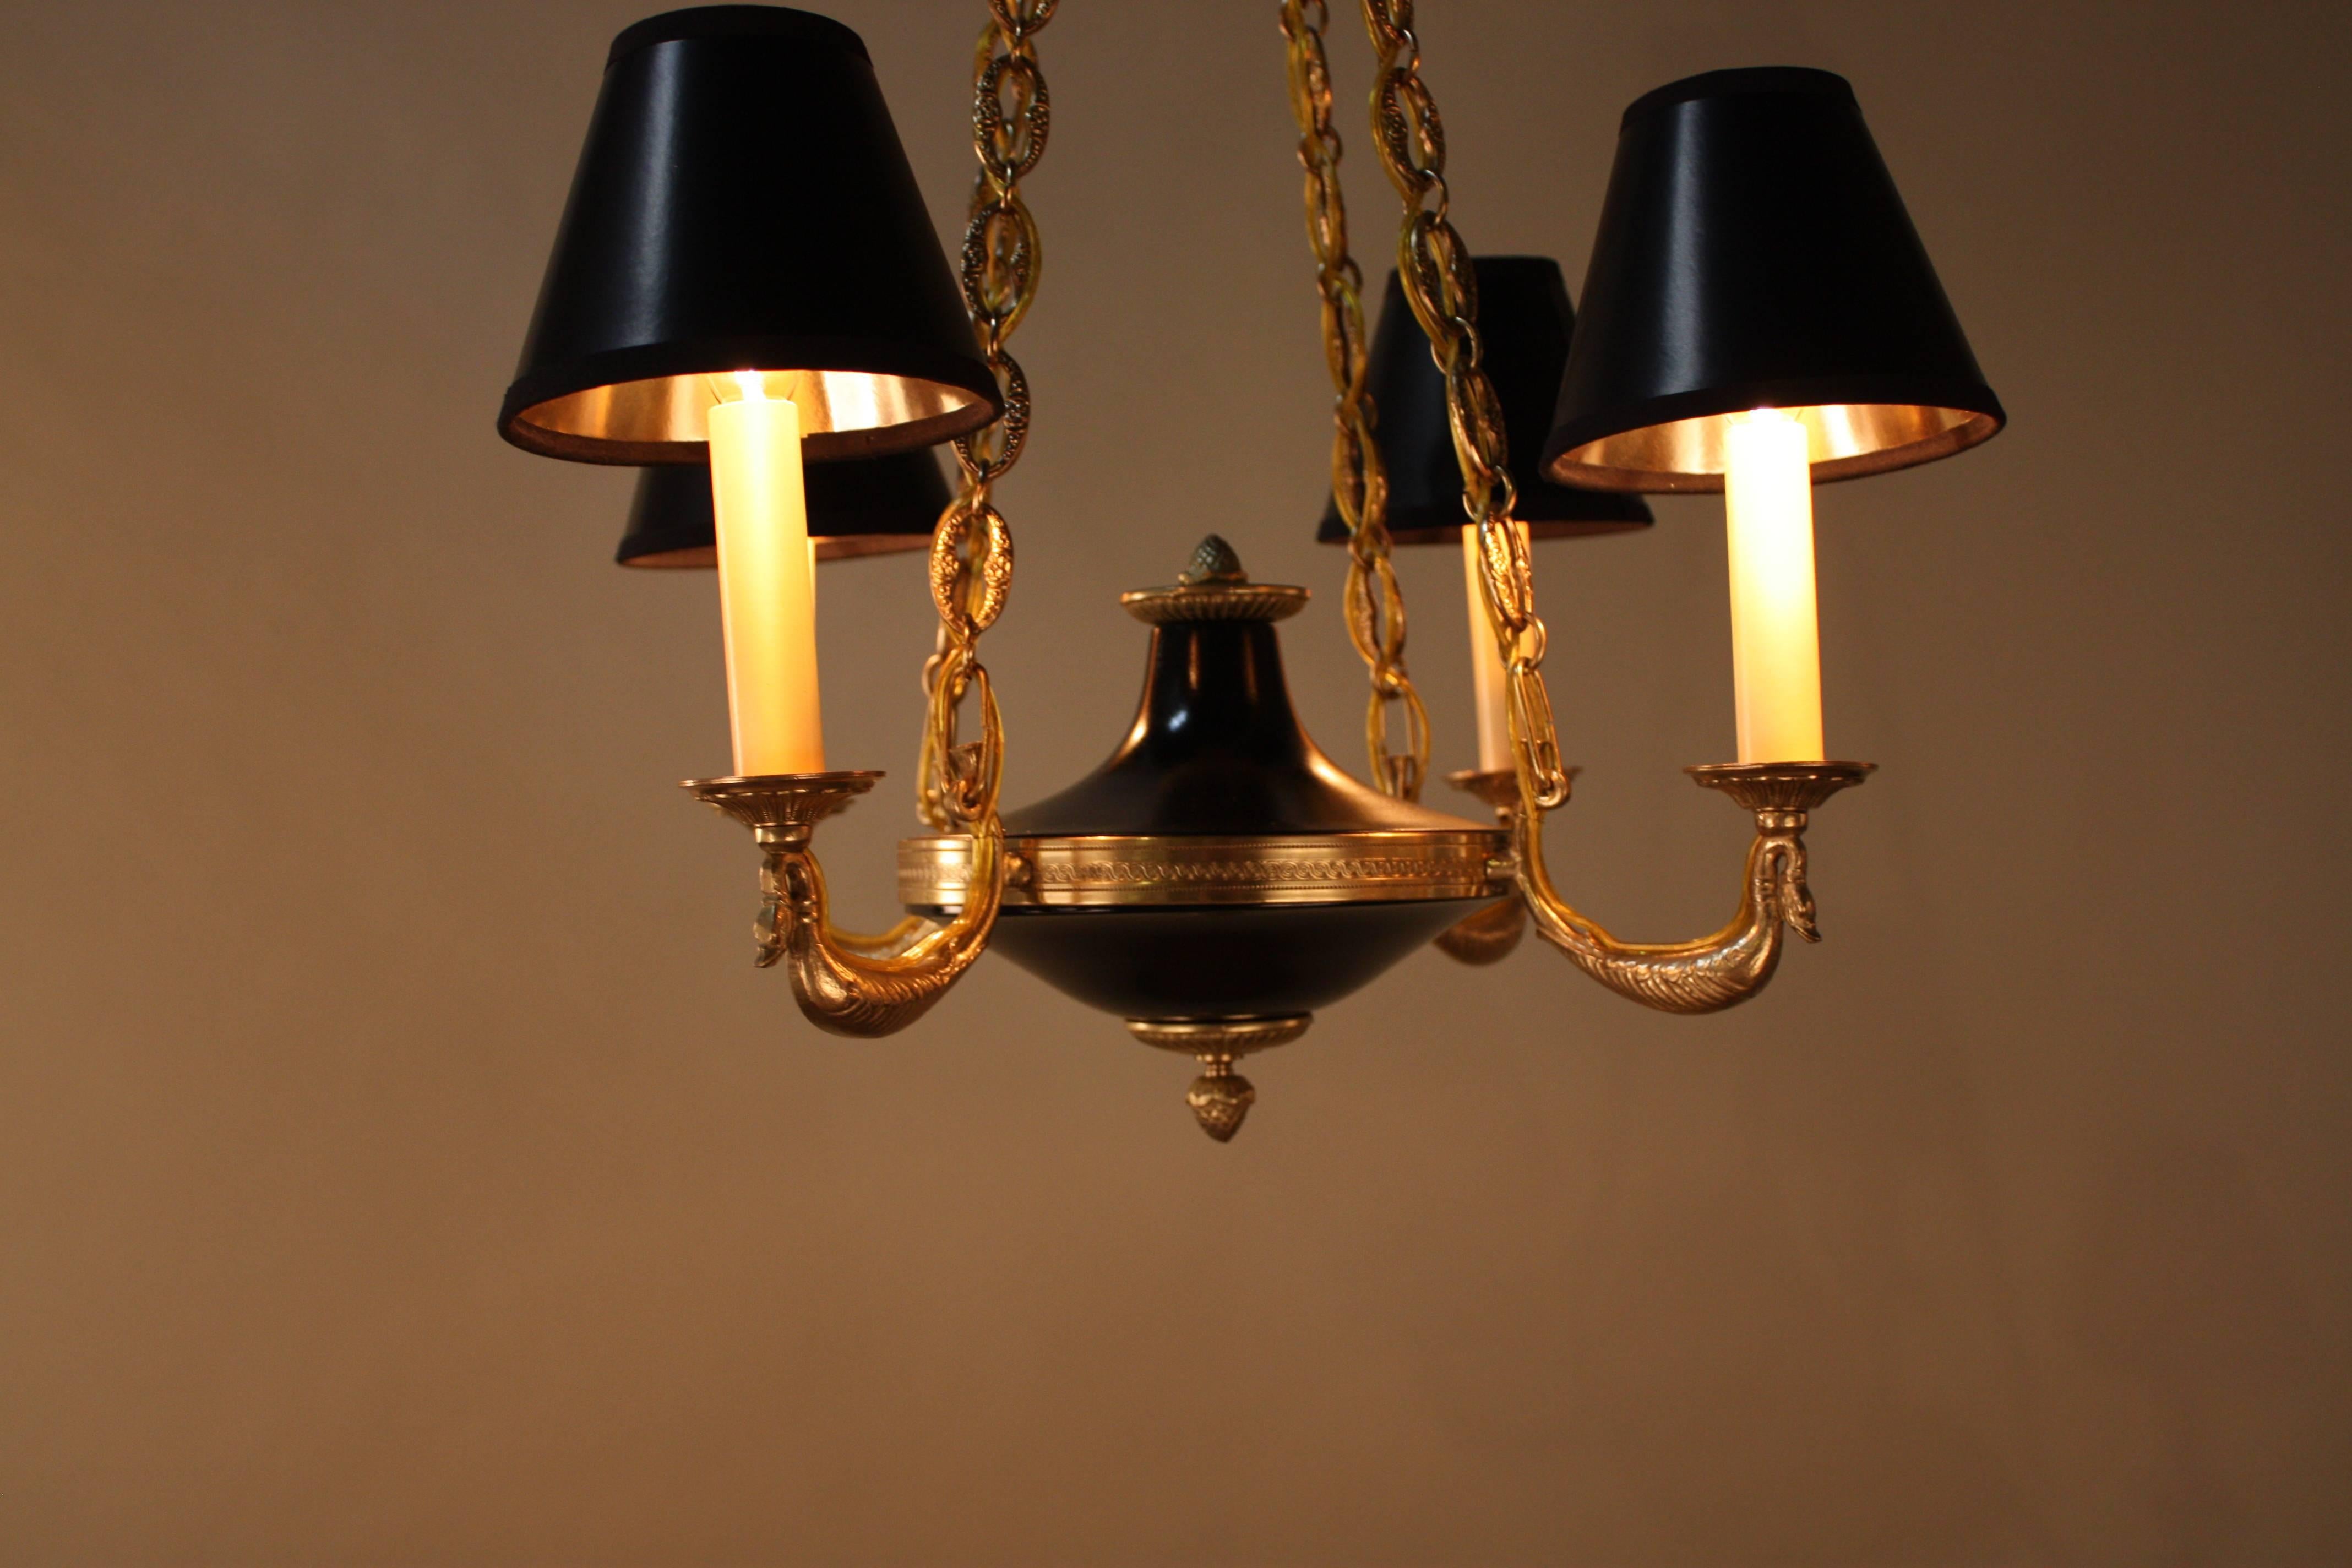 An elegant four-arm French bronze and black lacquer chandelier.
Measurement: Each arm extend 9.